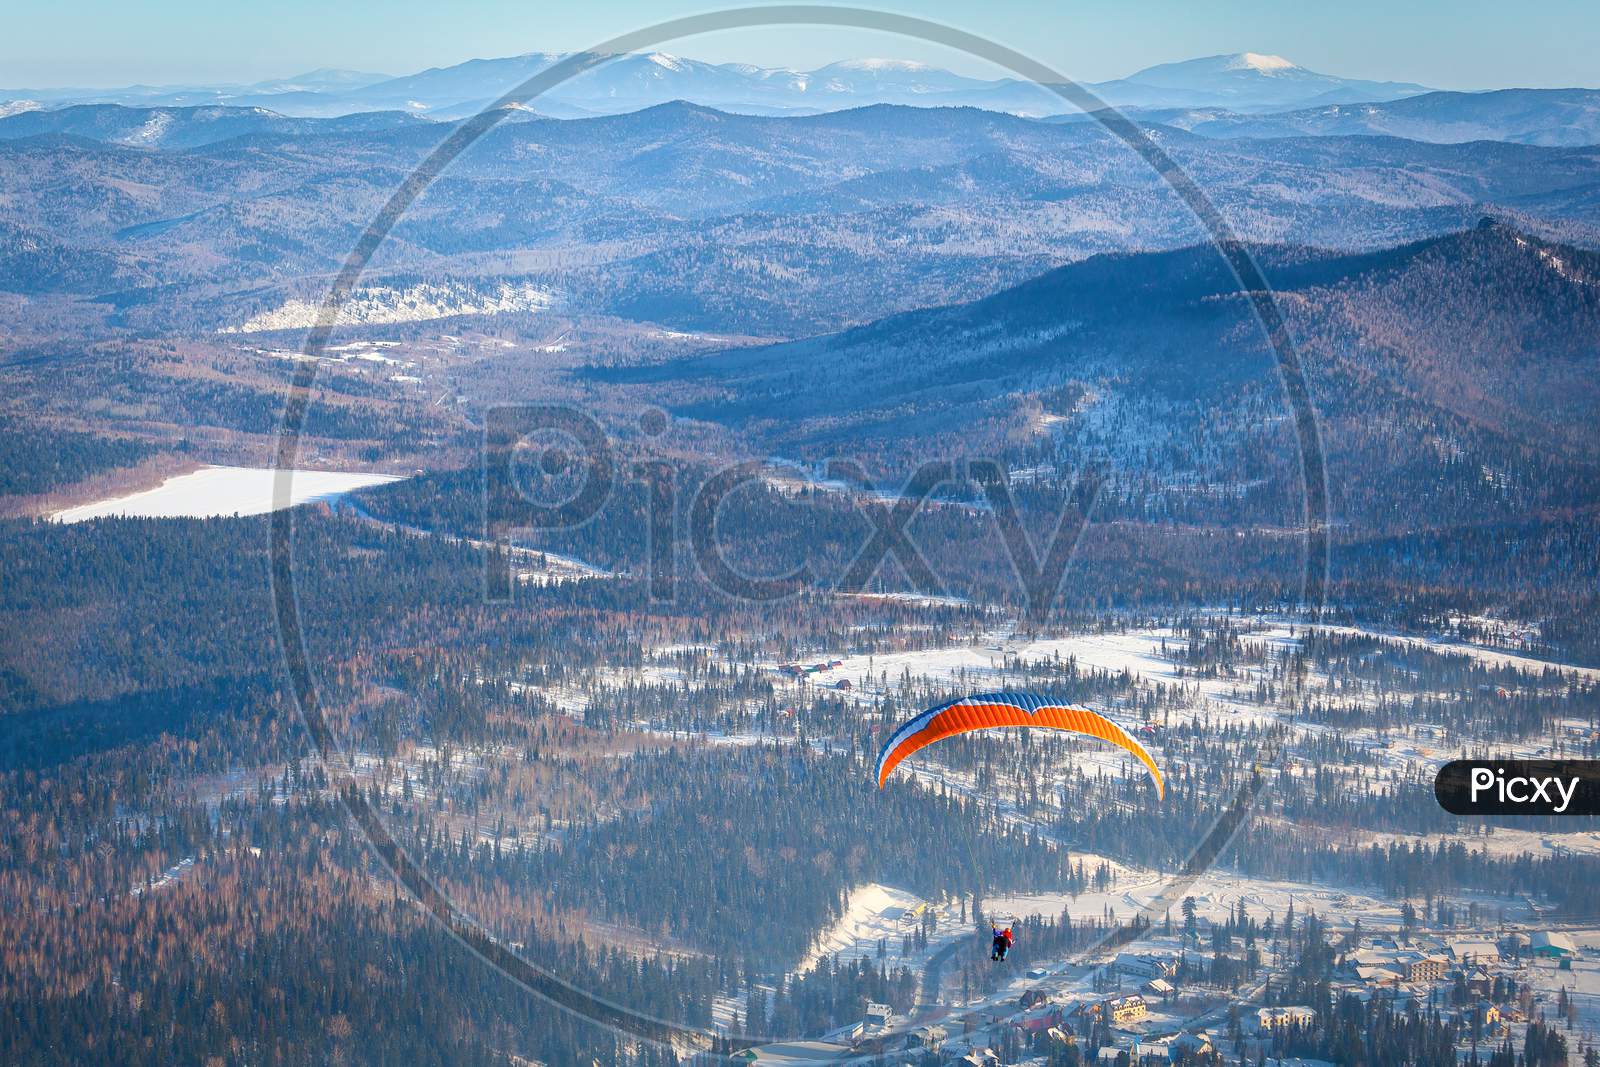 Man Flies With An Orange Parachute